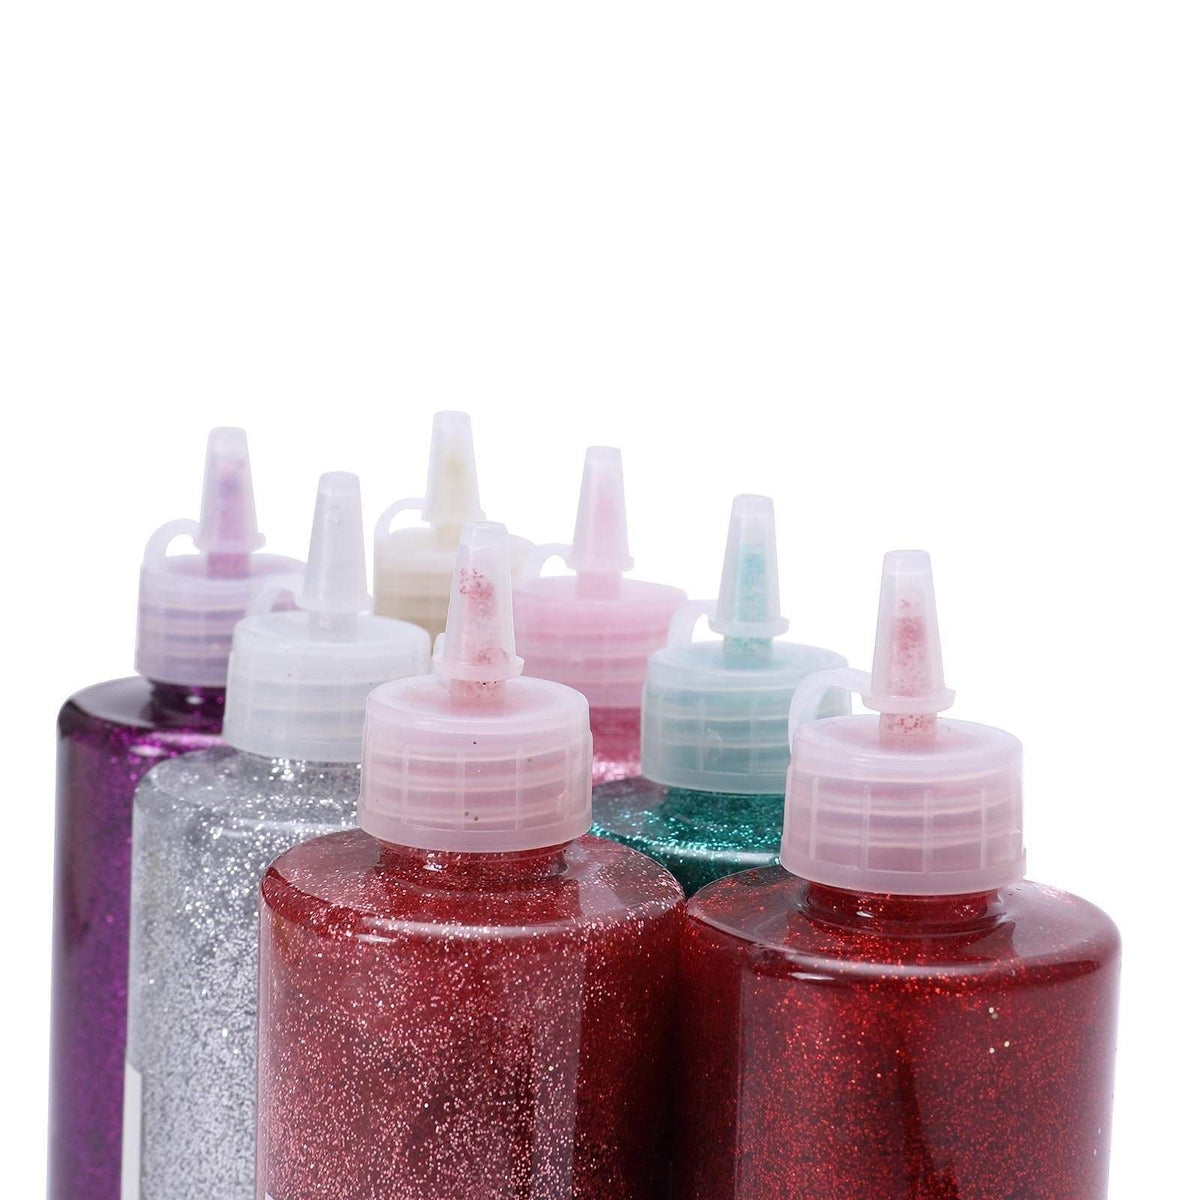 Glitter - Fine Glitter and Modge Podge Set - 5 Colors of 4oz Craft Glitter  Shaker Bottles with 8oz Craft Glue Gloss Finish - Great Glitter for Resin